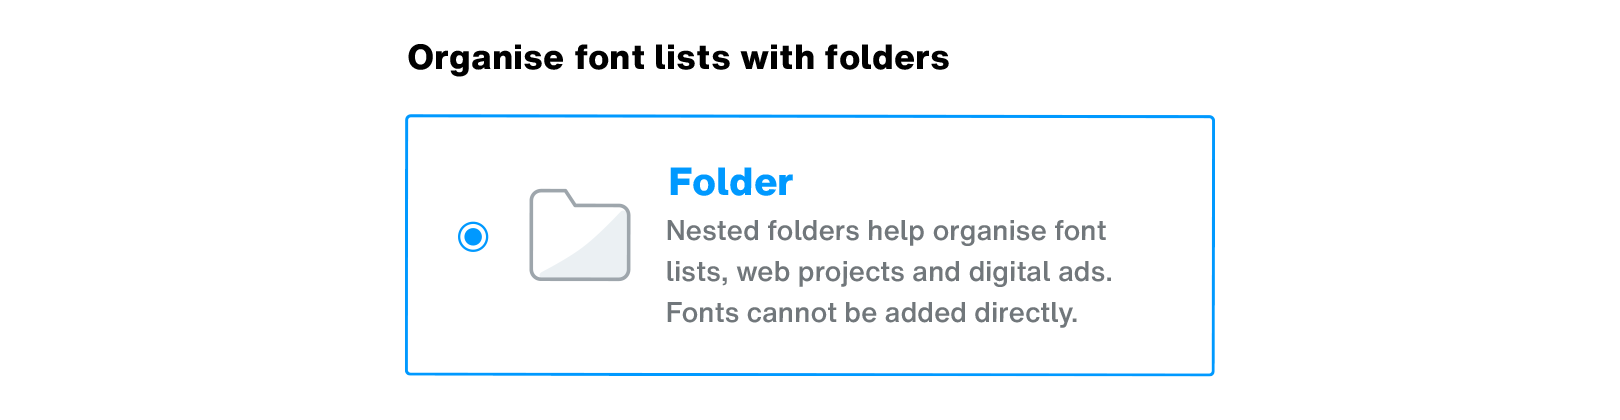 Organise list with folders 02